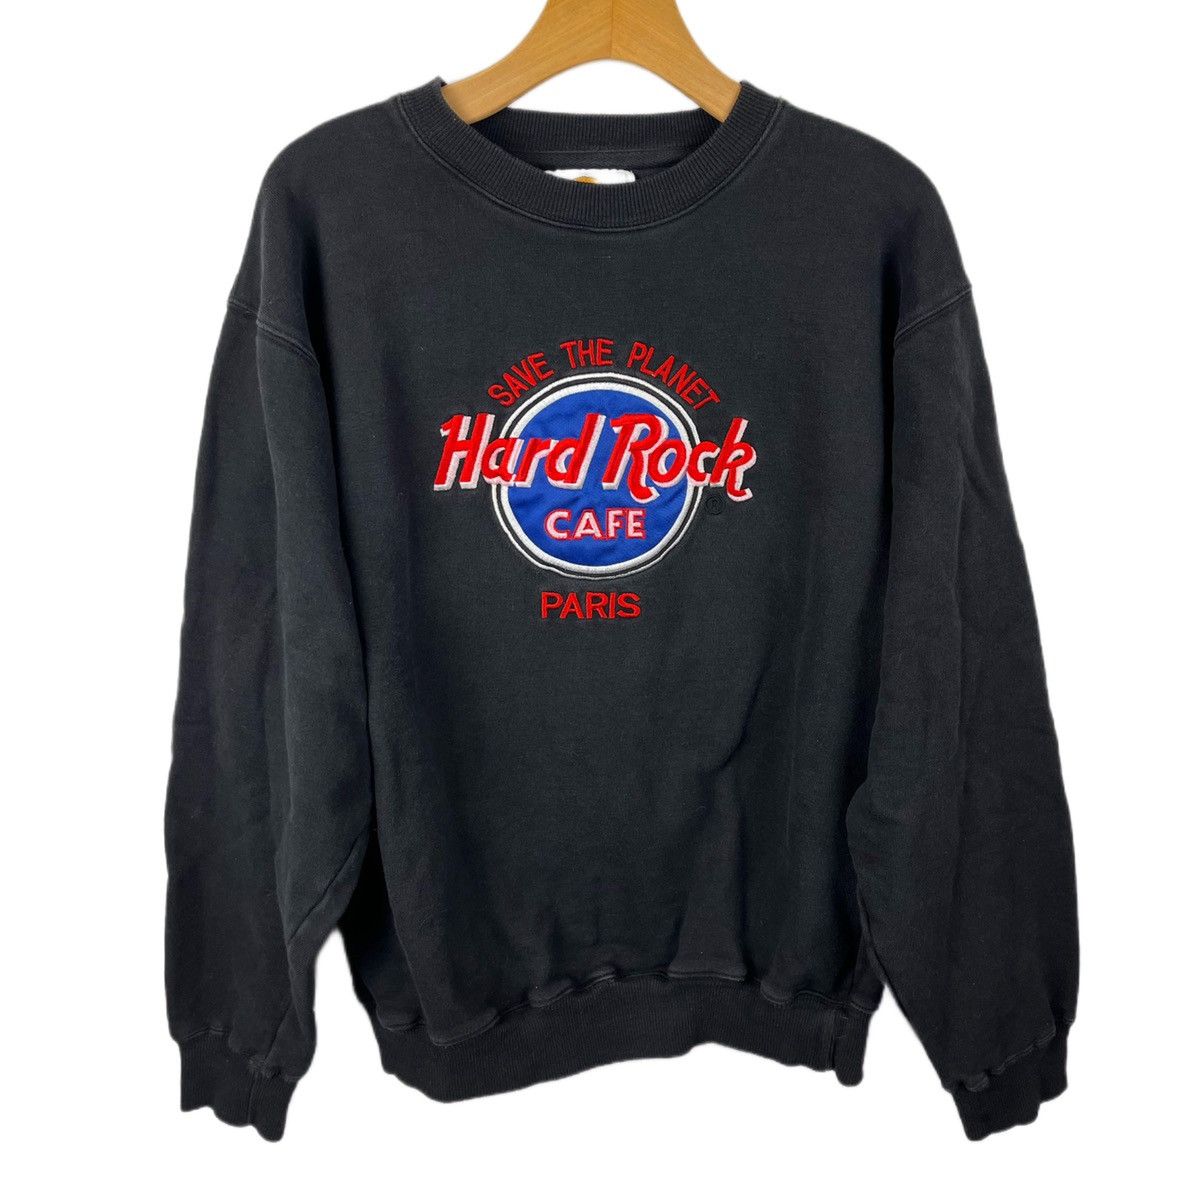 Vintage Vintage Save The World Hard Rock Cafe Sweater Size US L / EU 52-54 / 3 - 1 Preview